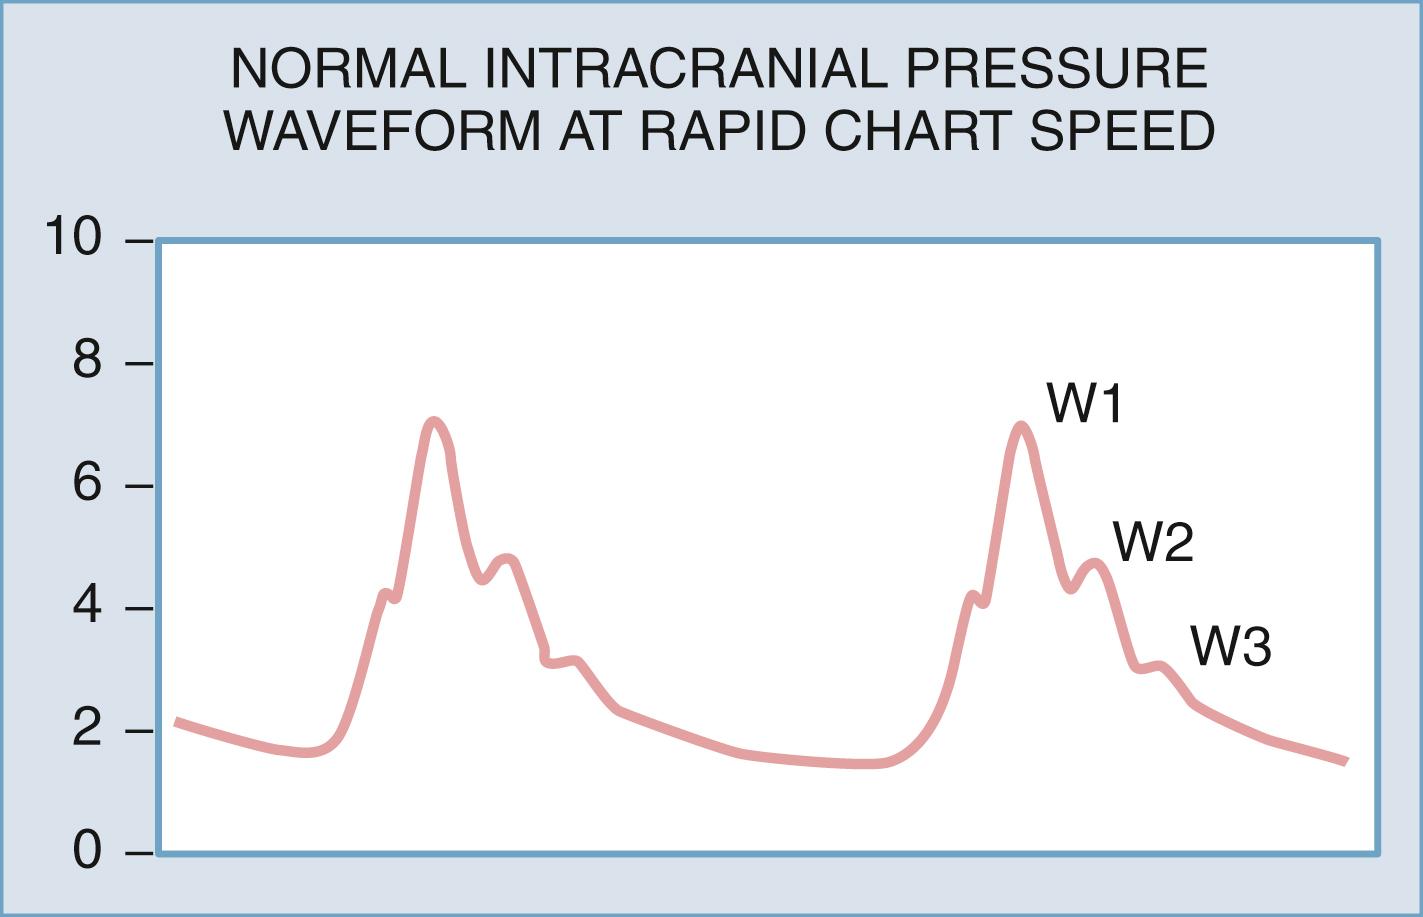 Figure 69.2, Normal intracranial pressure waveform at rapid chart speed.